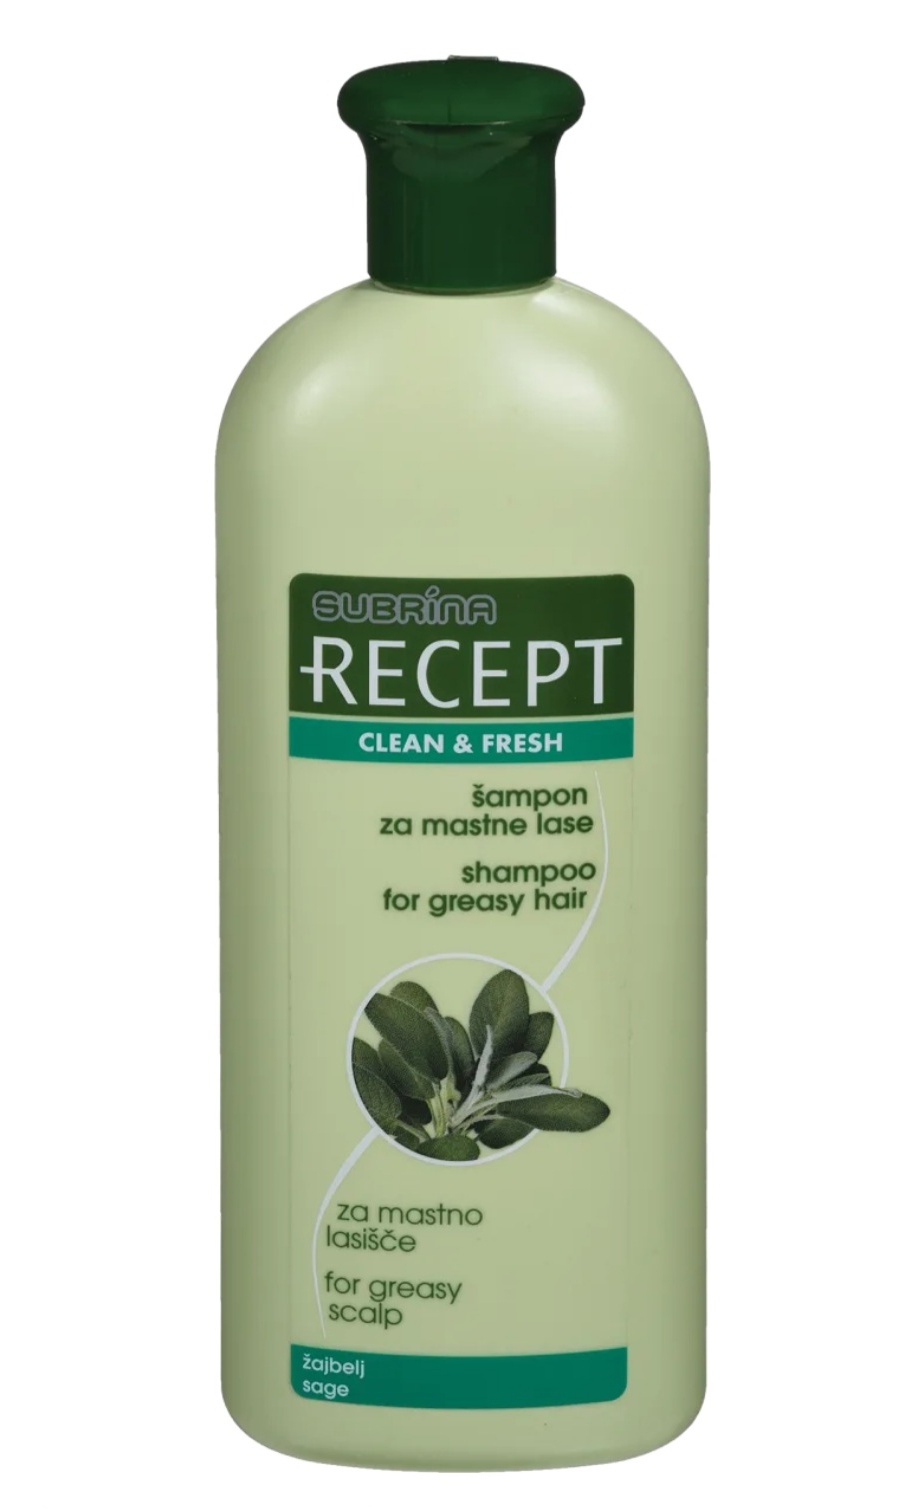 Subrina Recept Clean & Fresh Shampoo